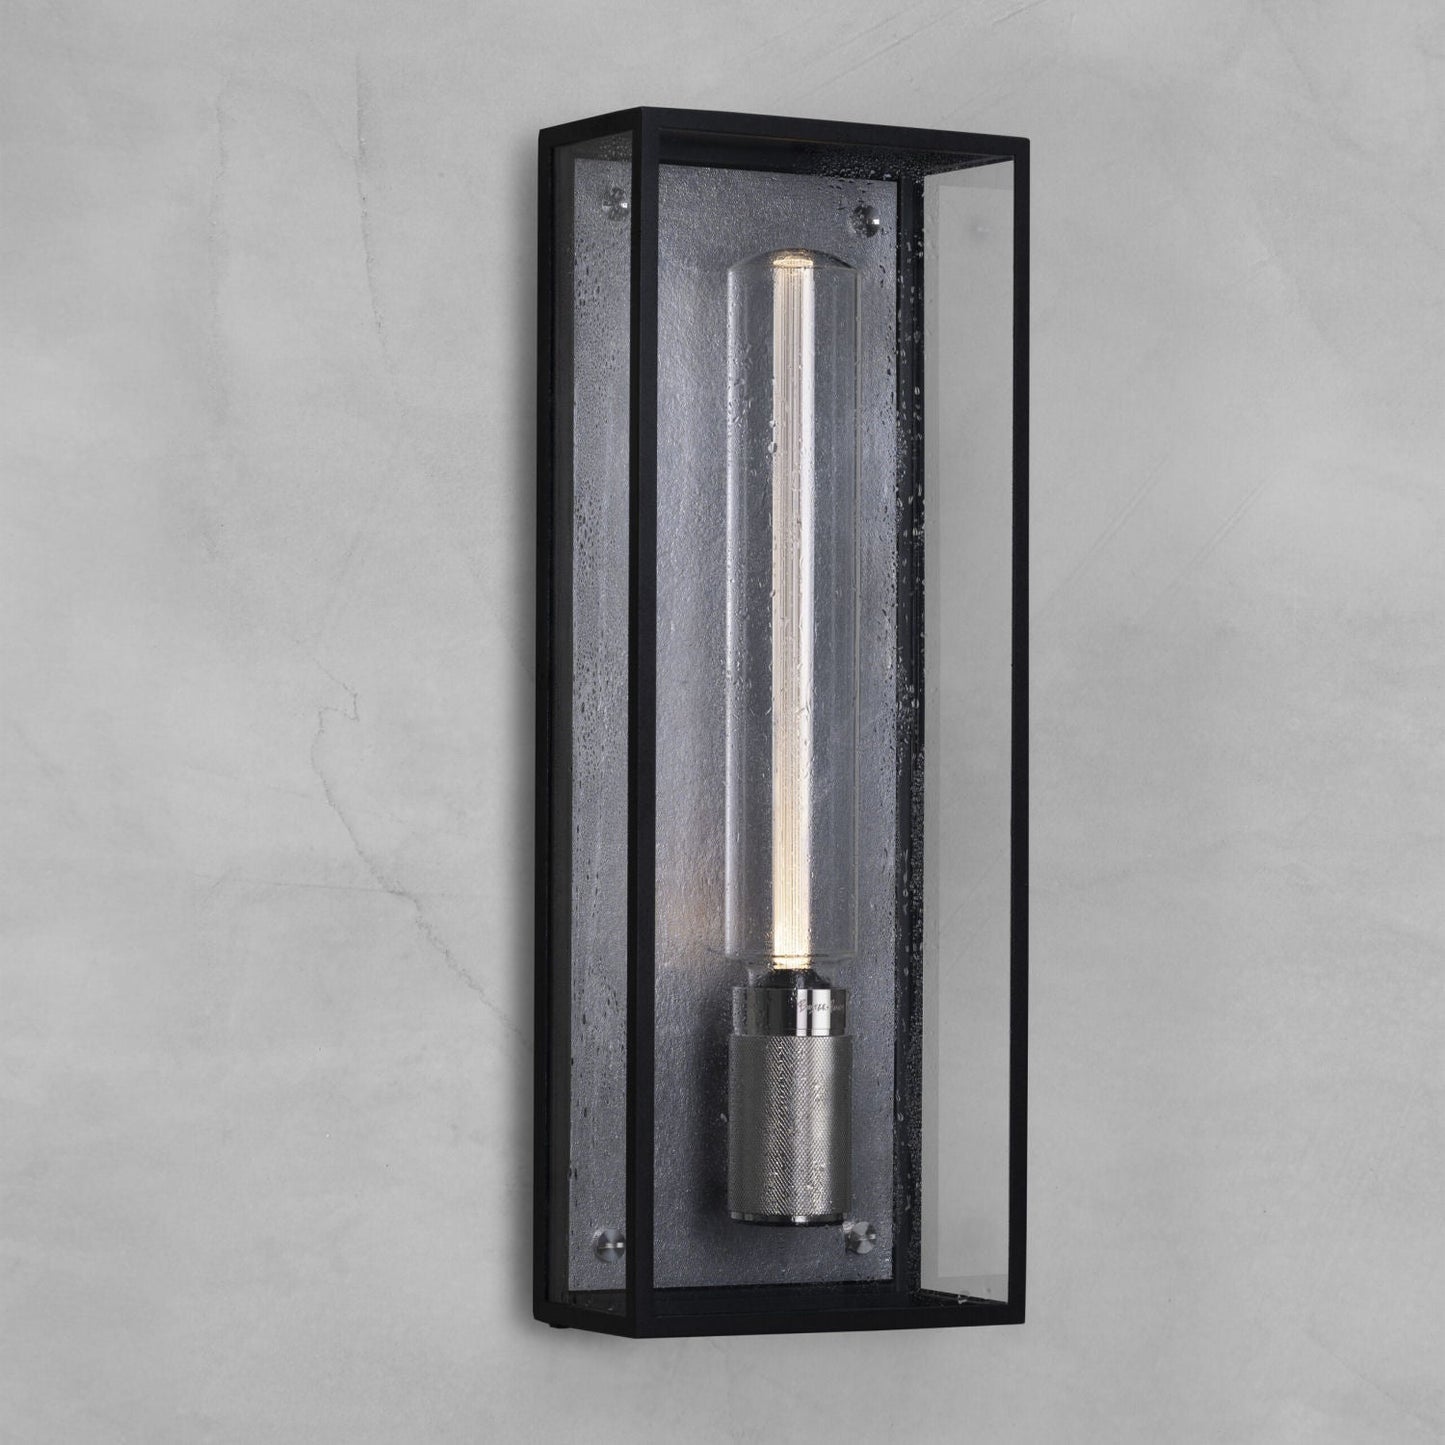 Industrial Caged Wall Bathroom Light in Steel - |VESIMI Design|